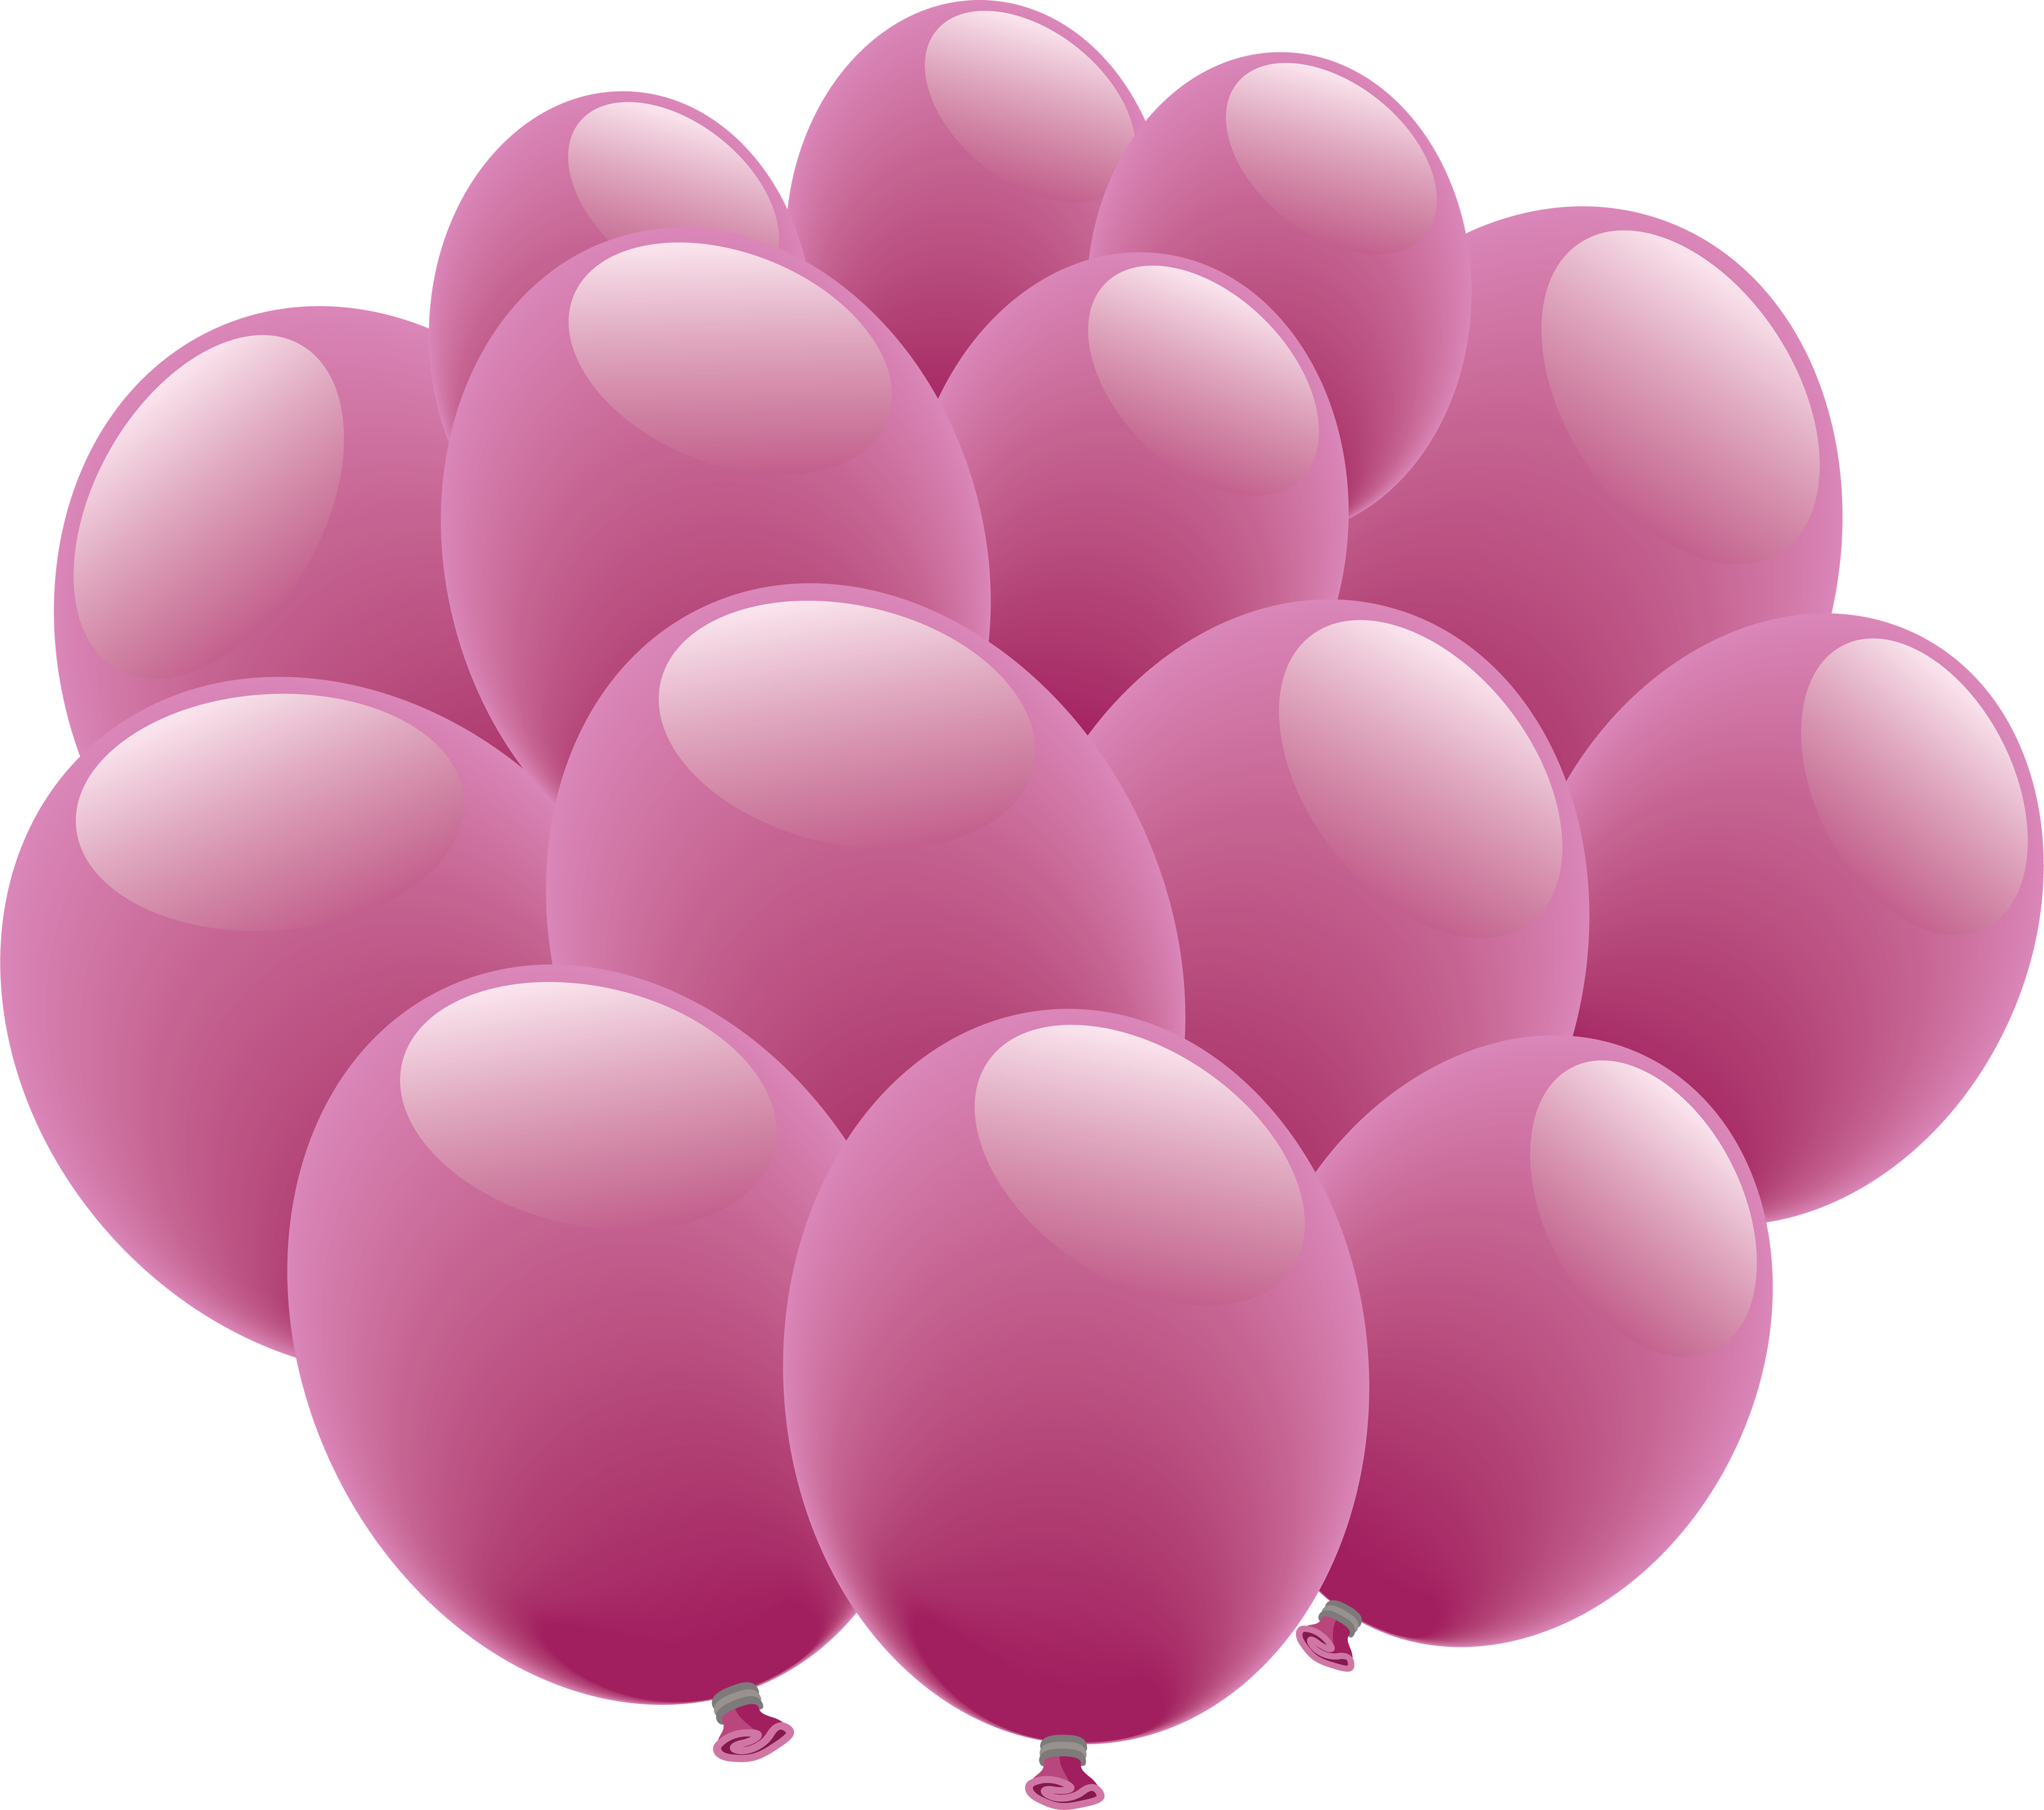 Balloons thirty four isolated. Clipart balloon peach